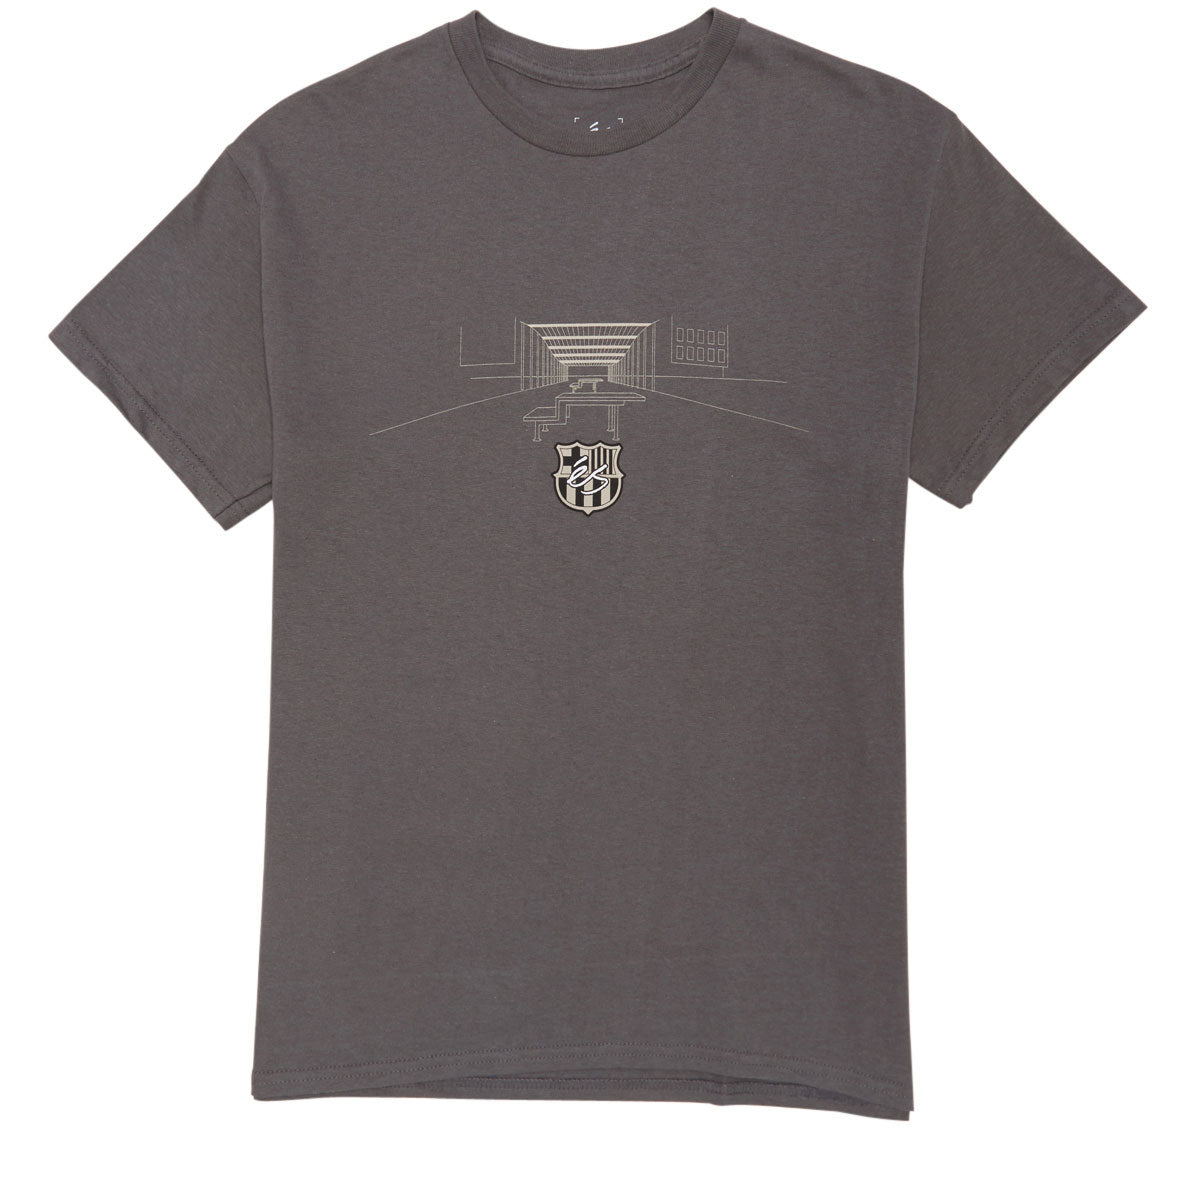 eS Sants T-Shirt - Charcoal image 1